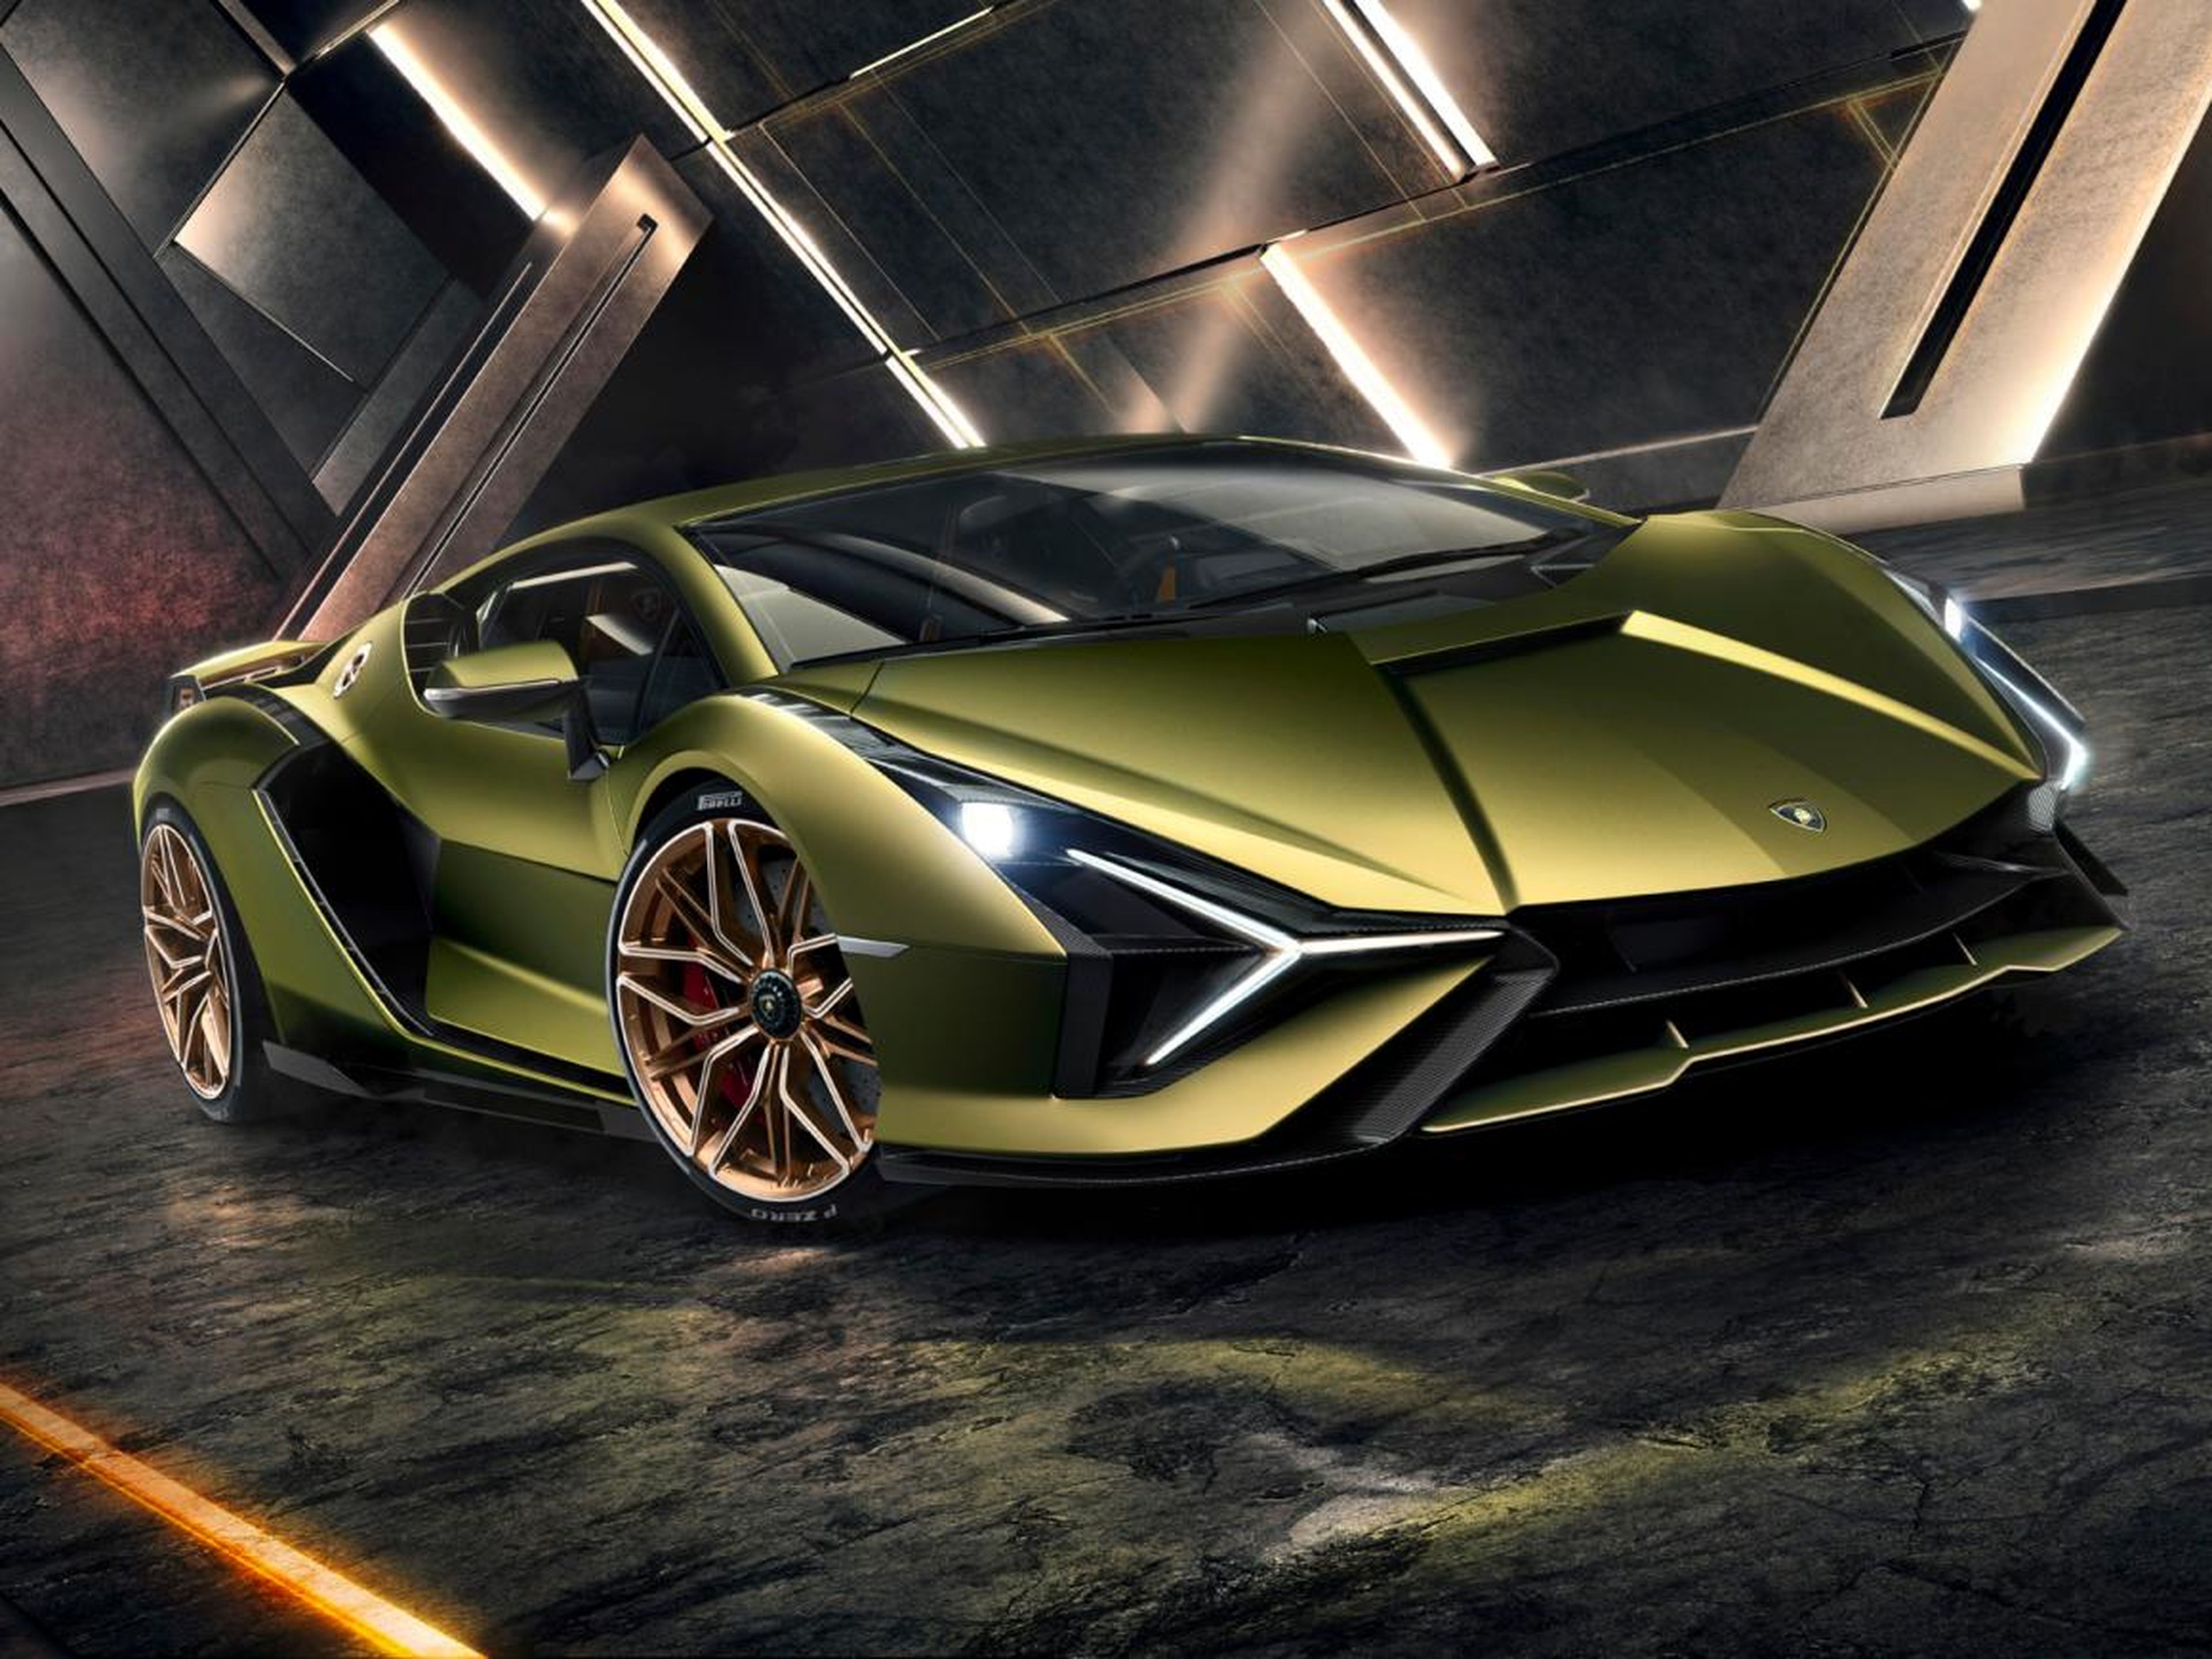 Lamborghini's Sián has an electric motor, making it the most powerful Lamborghini ever.